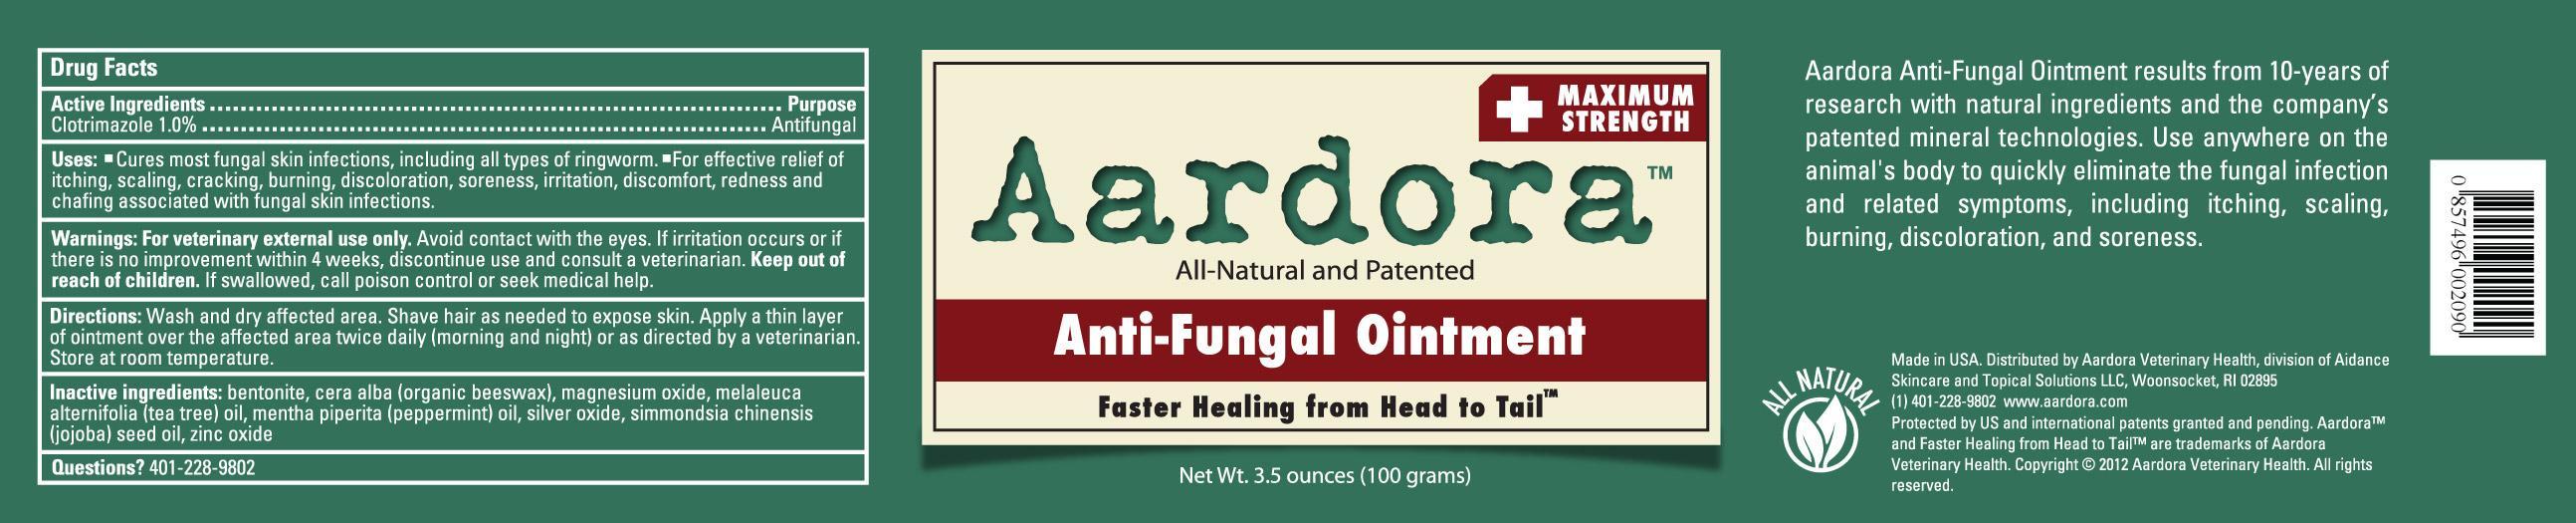 Aardora Anti-fungal Maximum Strength (Clotrimazole) Ointment [Aidance Skincare & Topical Solutions, Llc]